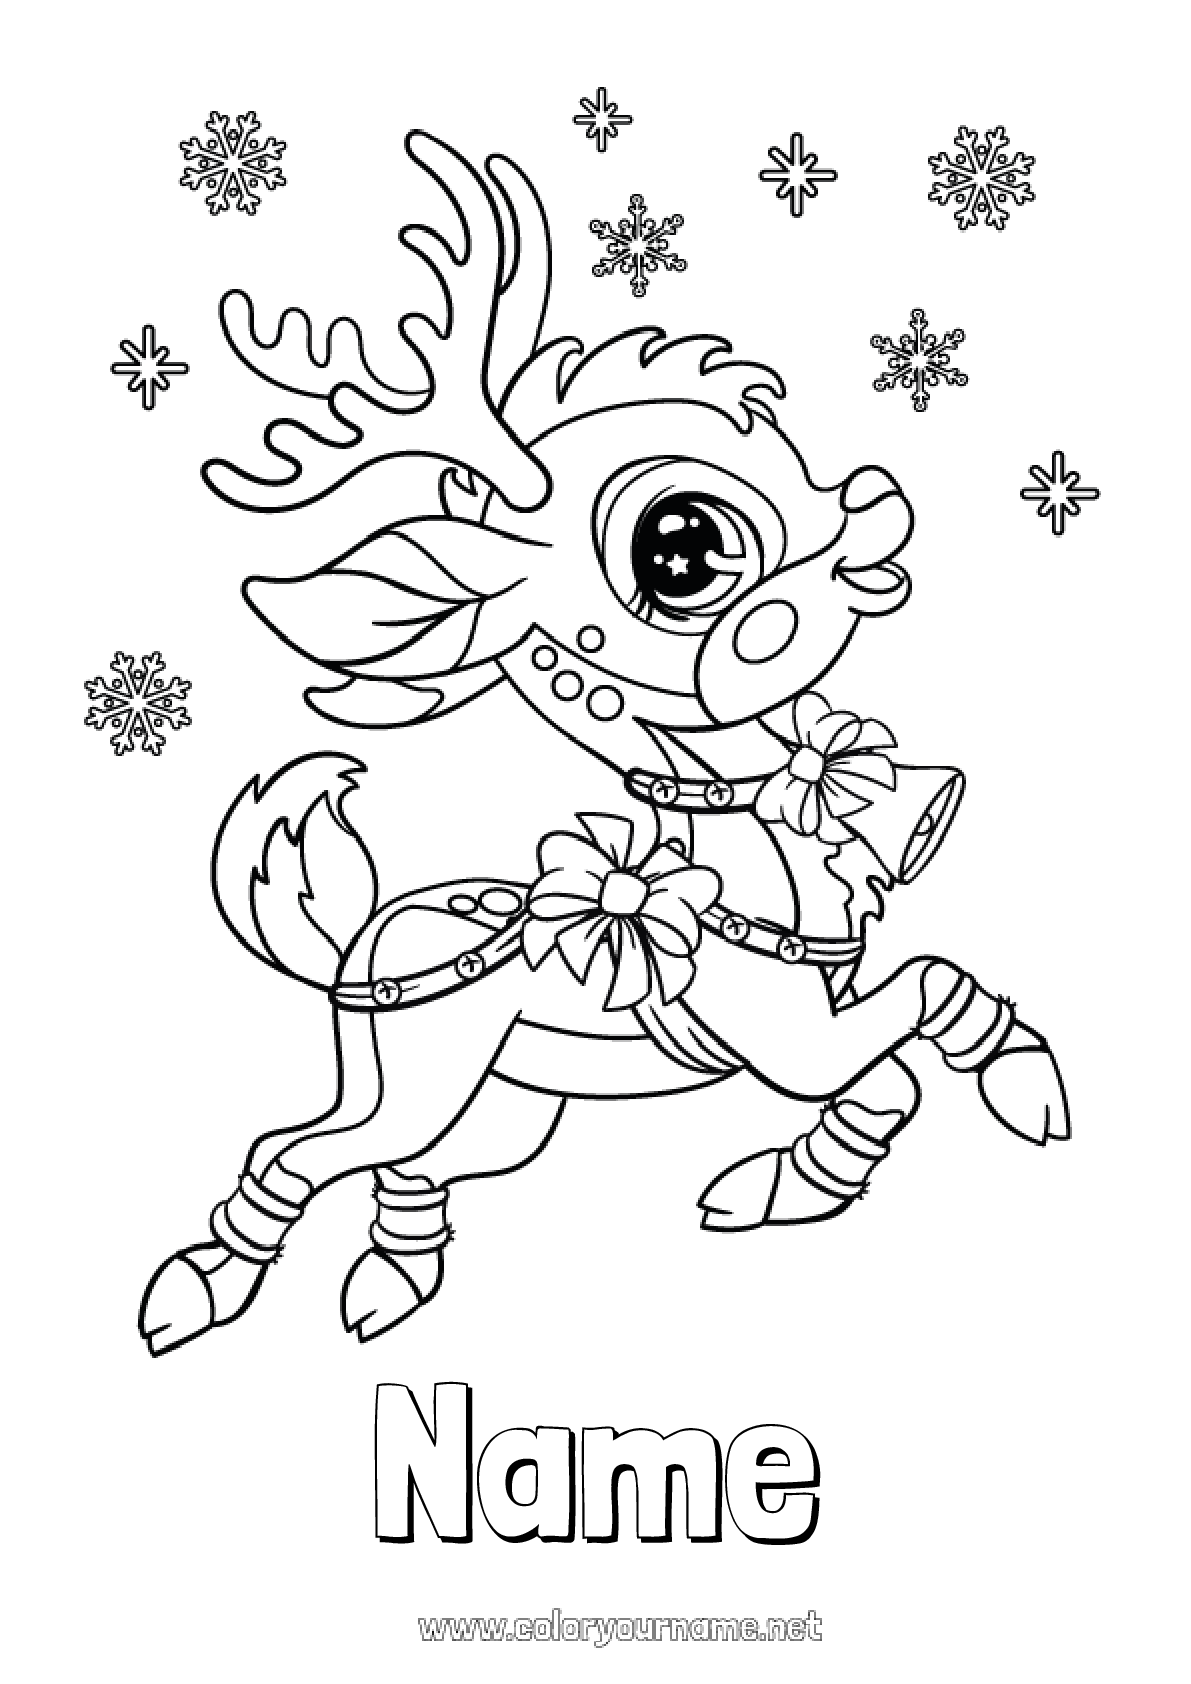 Coloring page No.560 - Cute Winter Reindeer